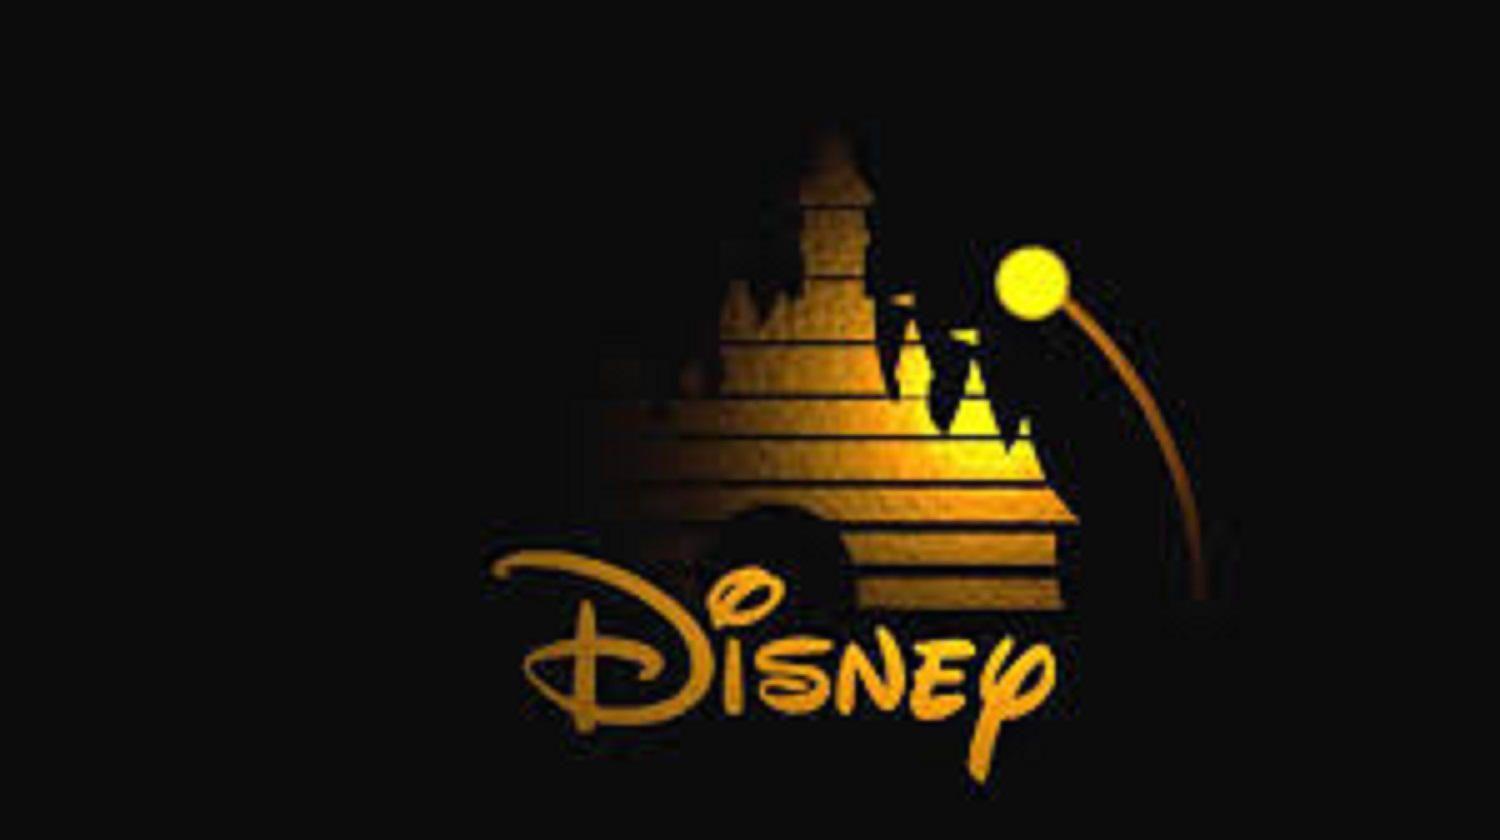 Flashlight Logo - Disney flashlight logo by JAMNetwork on DeviantArt